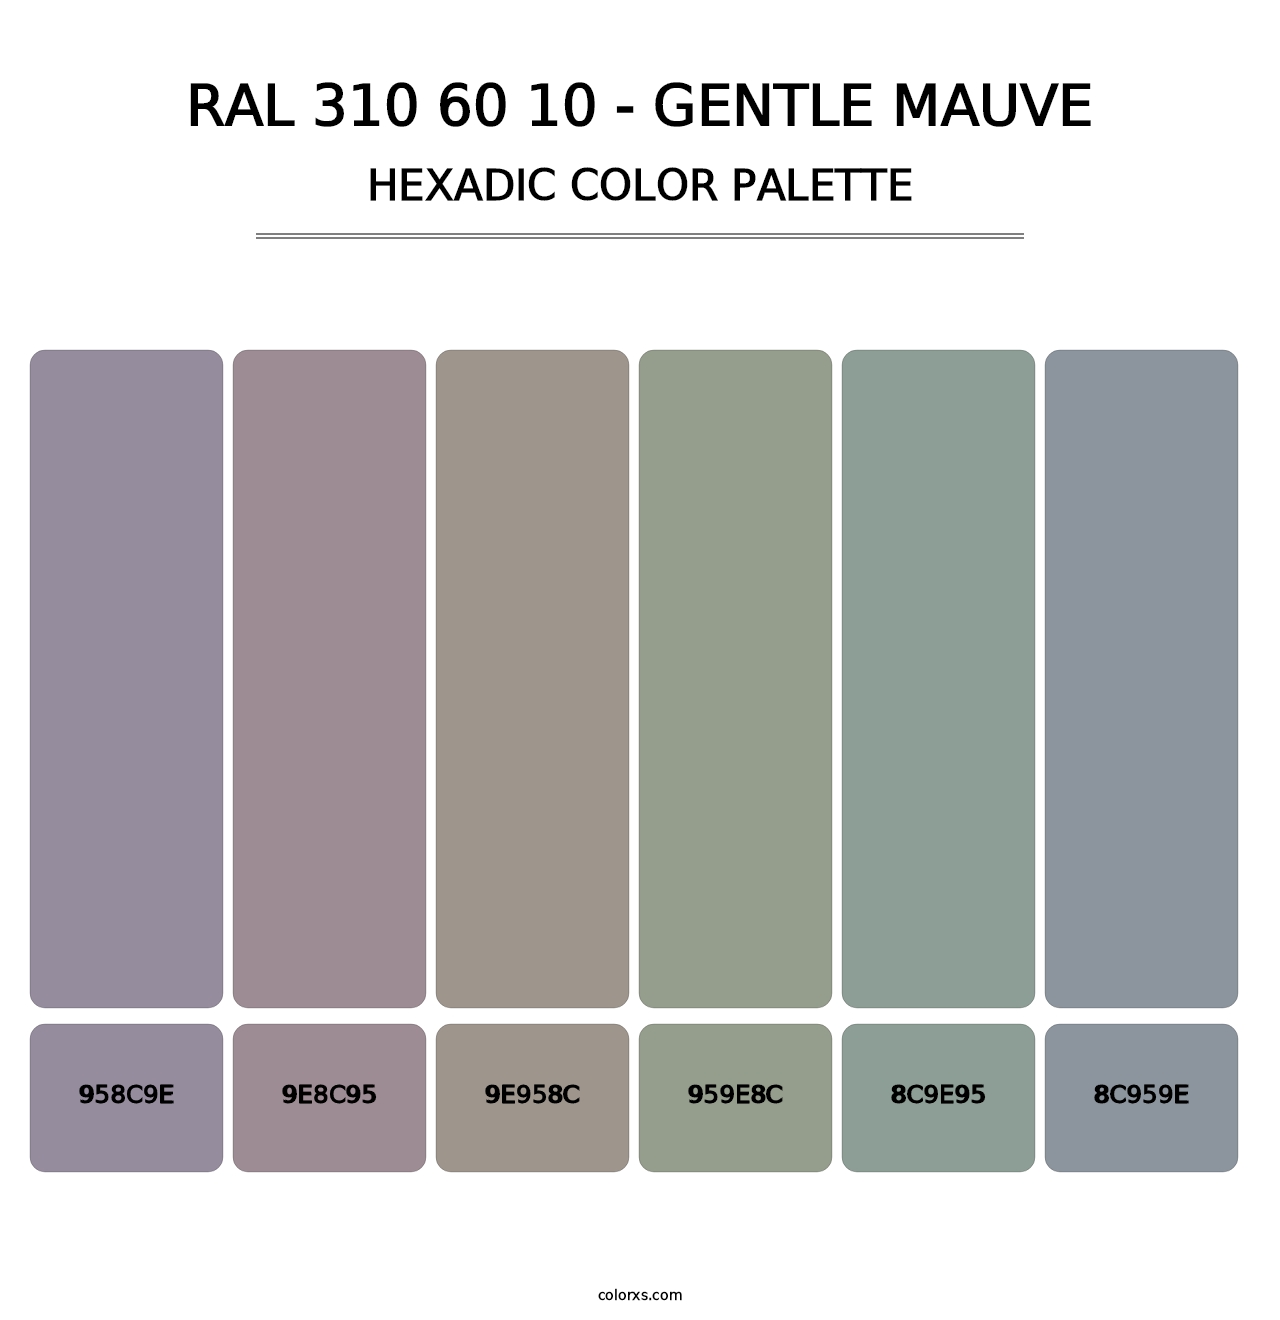 RAL 310 60 10 - Gentle Mauve - Hexadic Color Palette